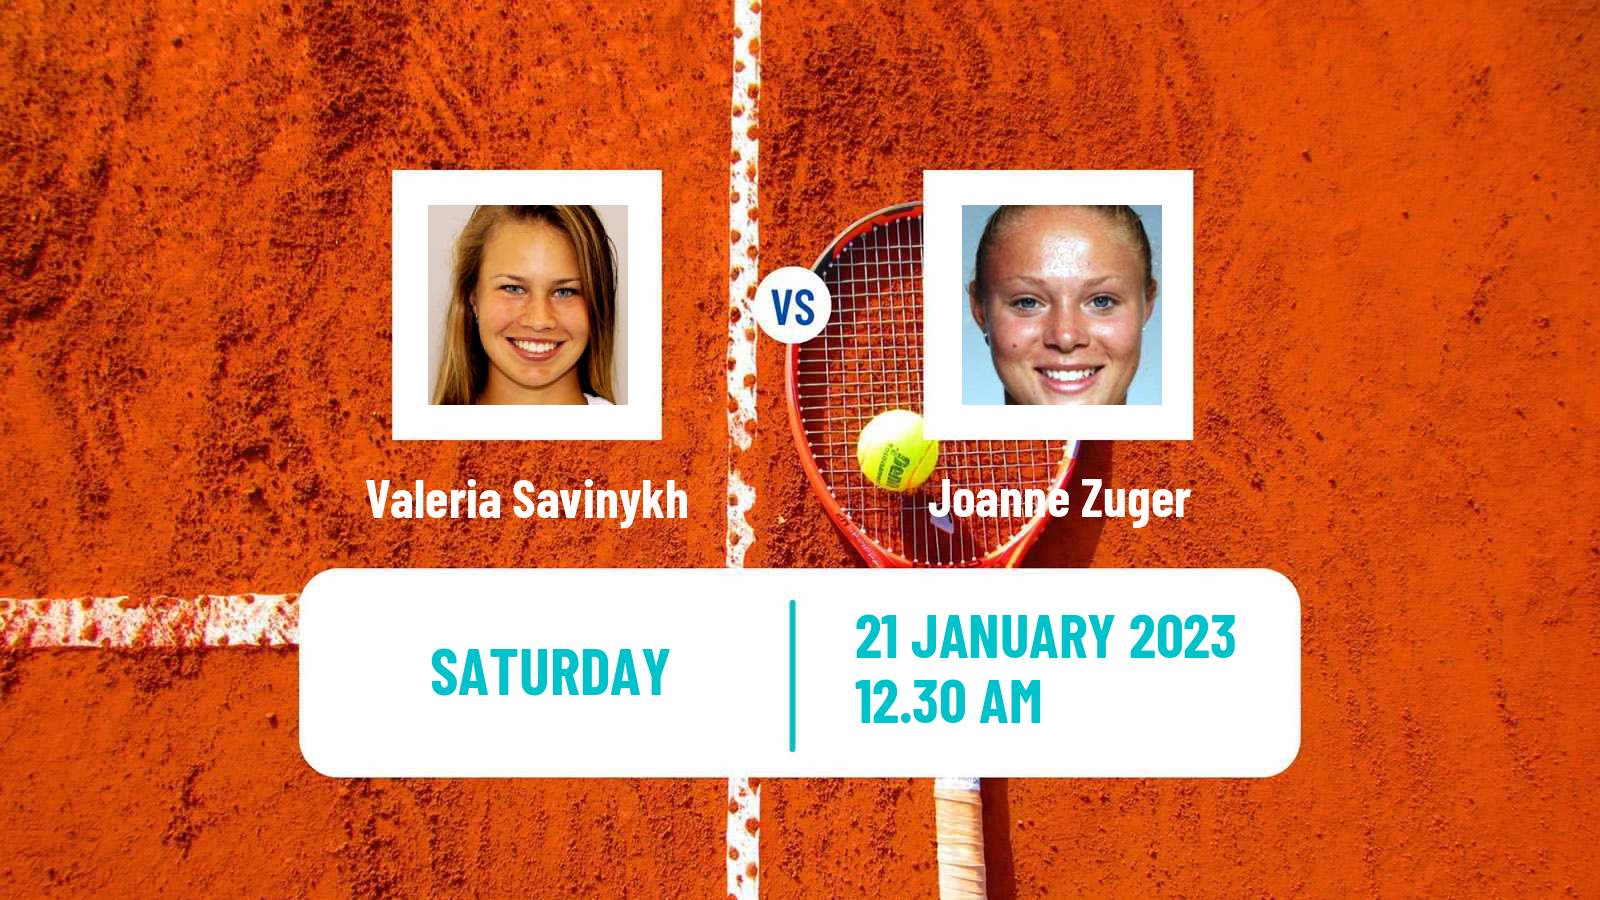 Tennis ITF Tournaments Valeria Savinykh - Joanne Zuger